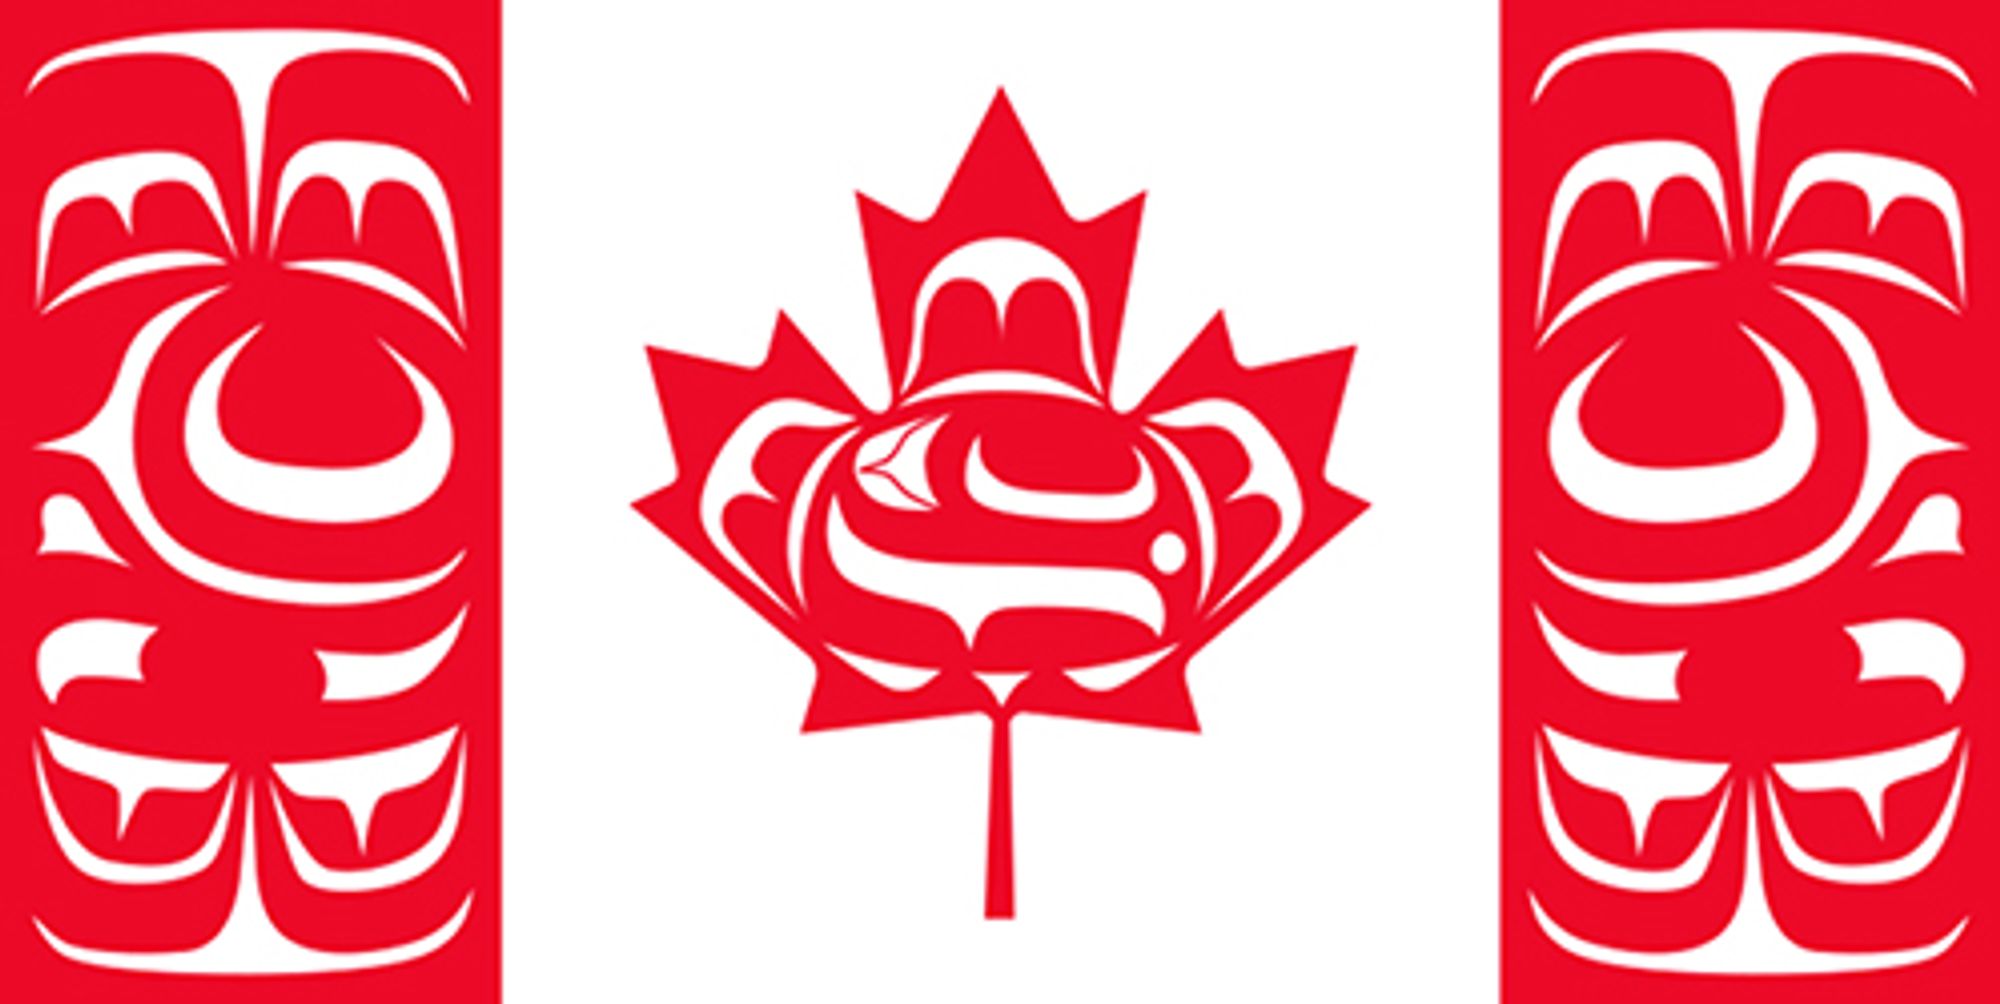 Canadian Indigenous flag by Kwakwaka’wakw artist Curtis Wilson